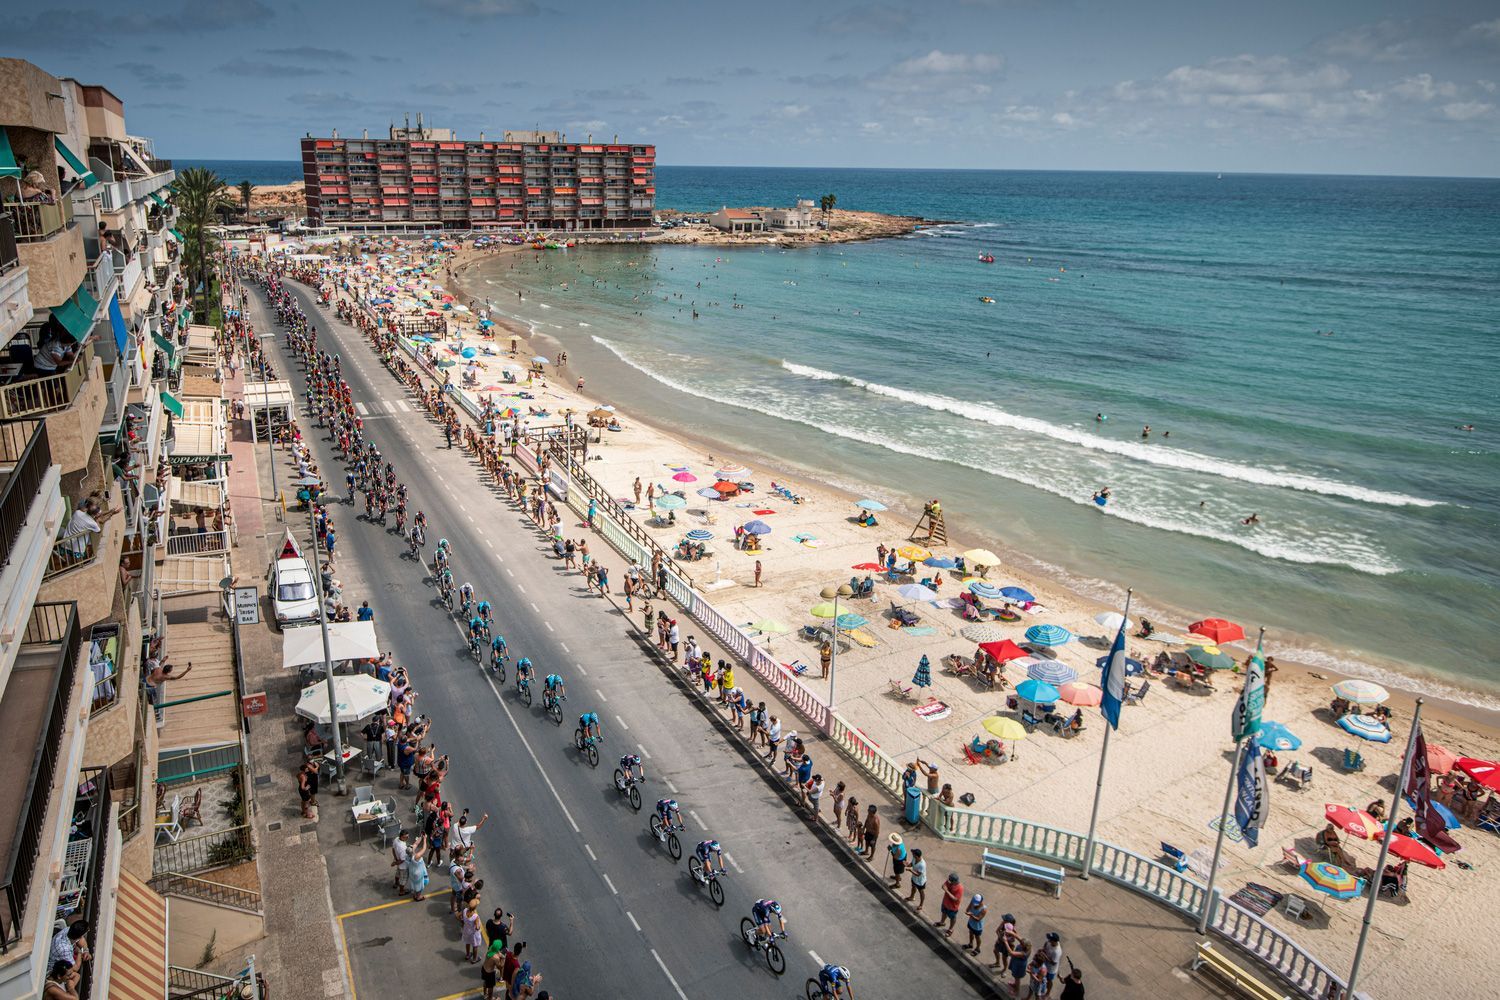 La Vuelta peloton riding along the Spanish coastline